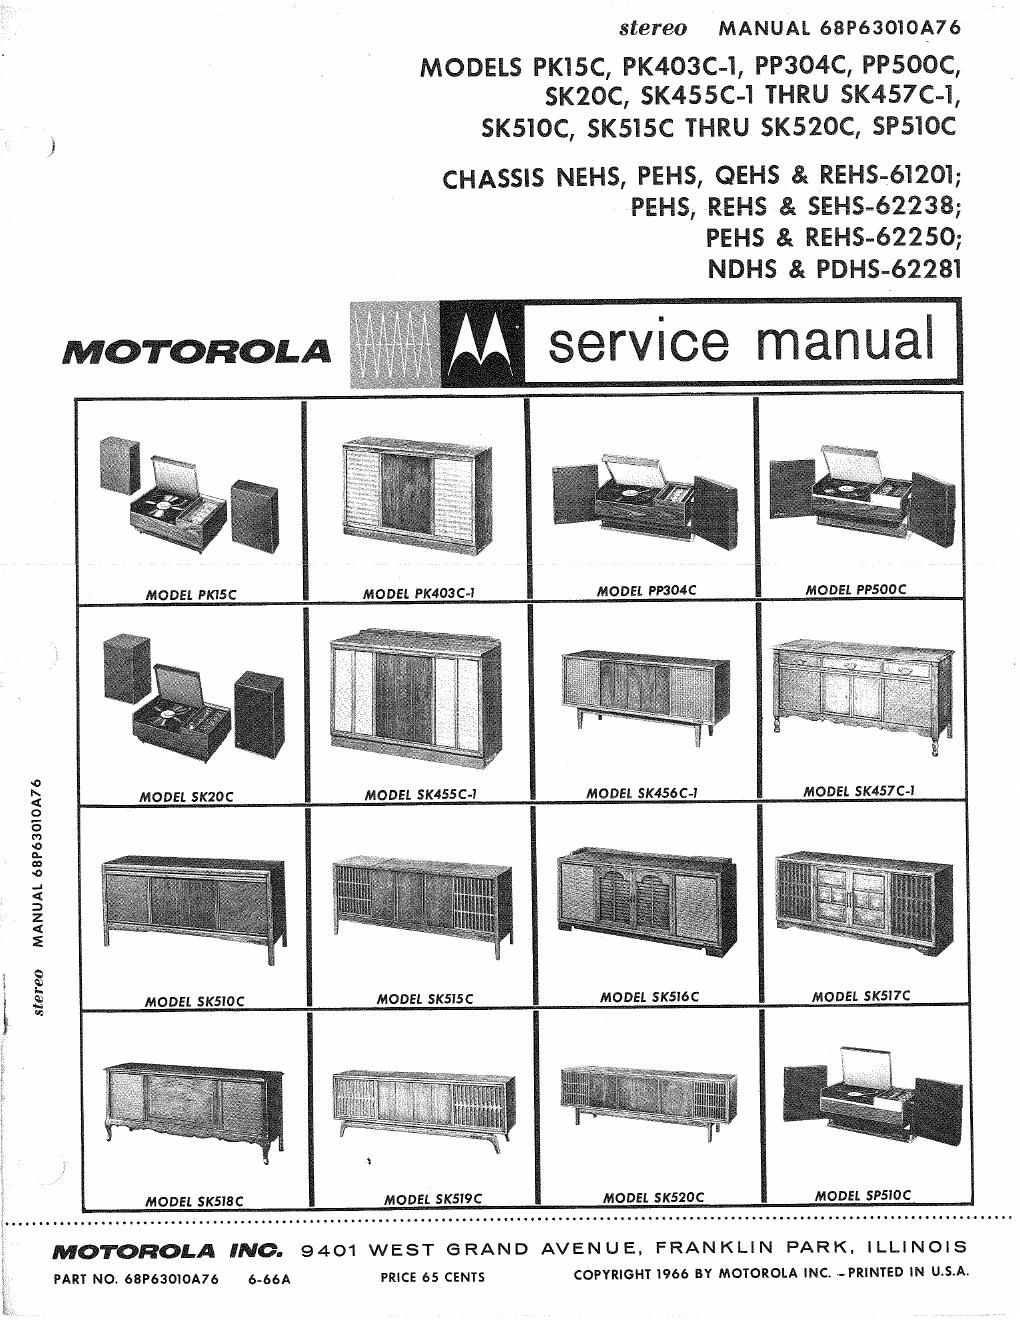 motorola sk 455 c 1 service manual